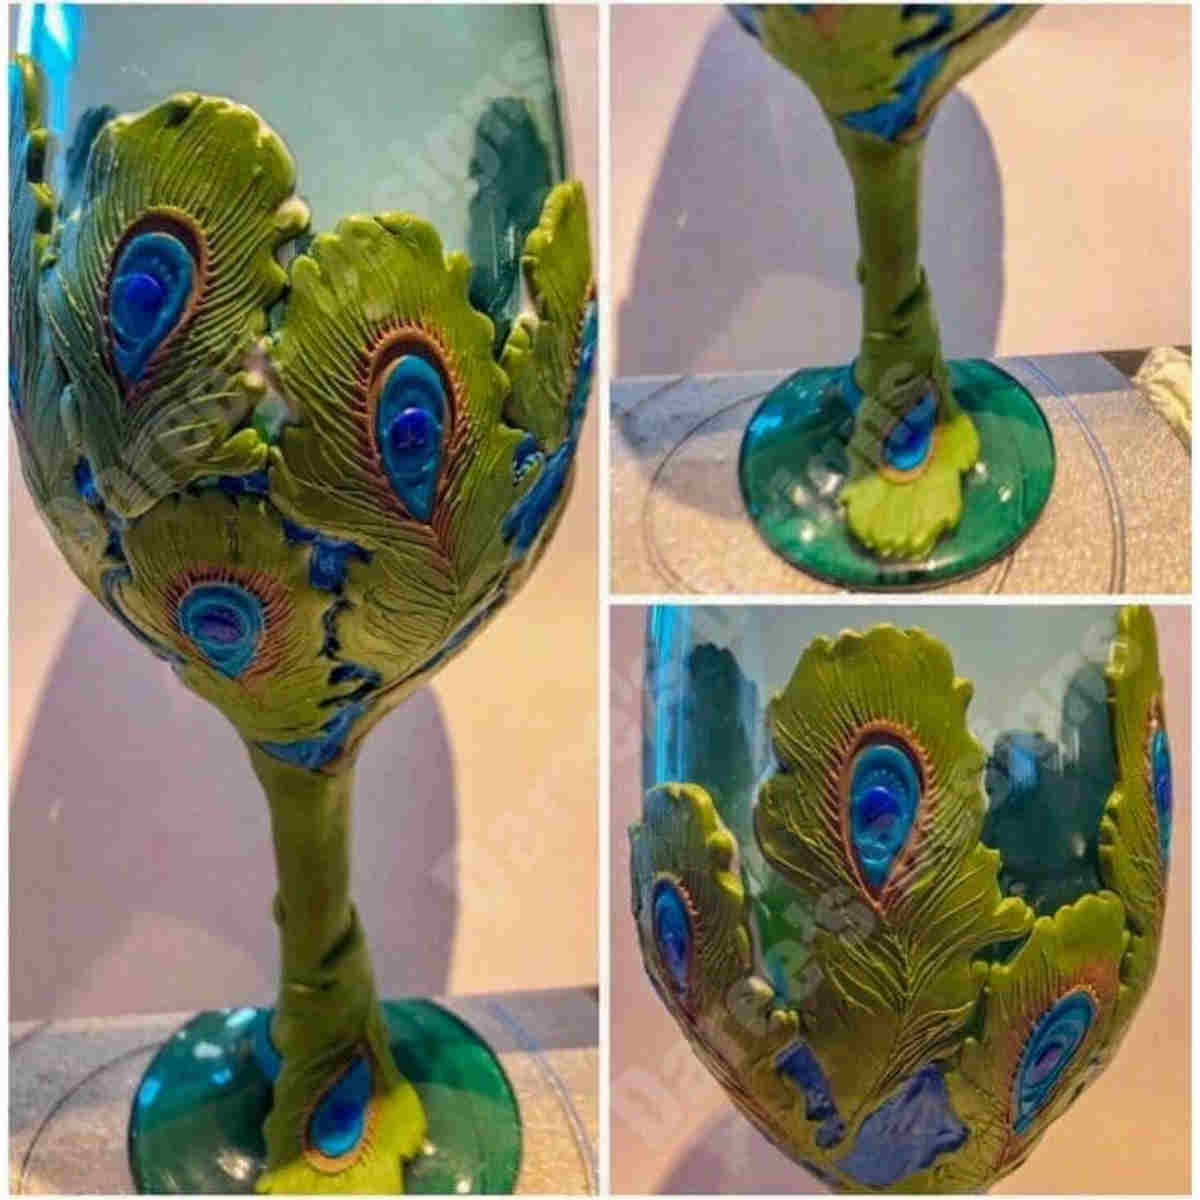 Peacock Stemmed Goblets - Decorative Glassware for Special Occasions -  Daree's Designs - Darees Designs